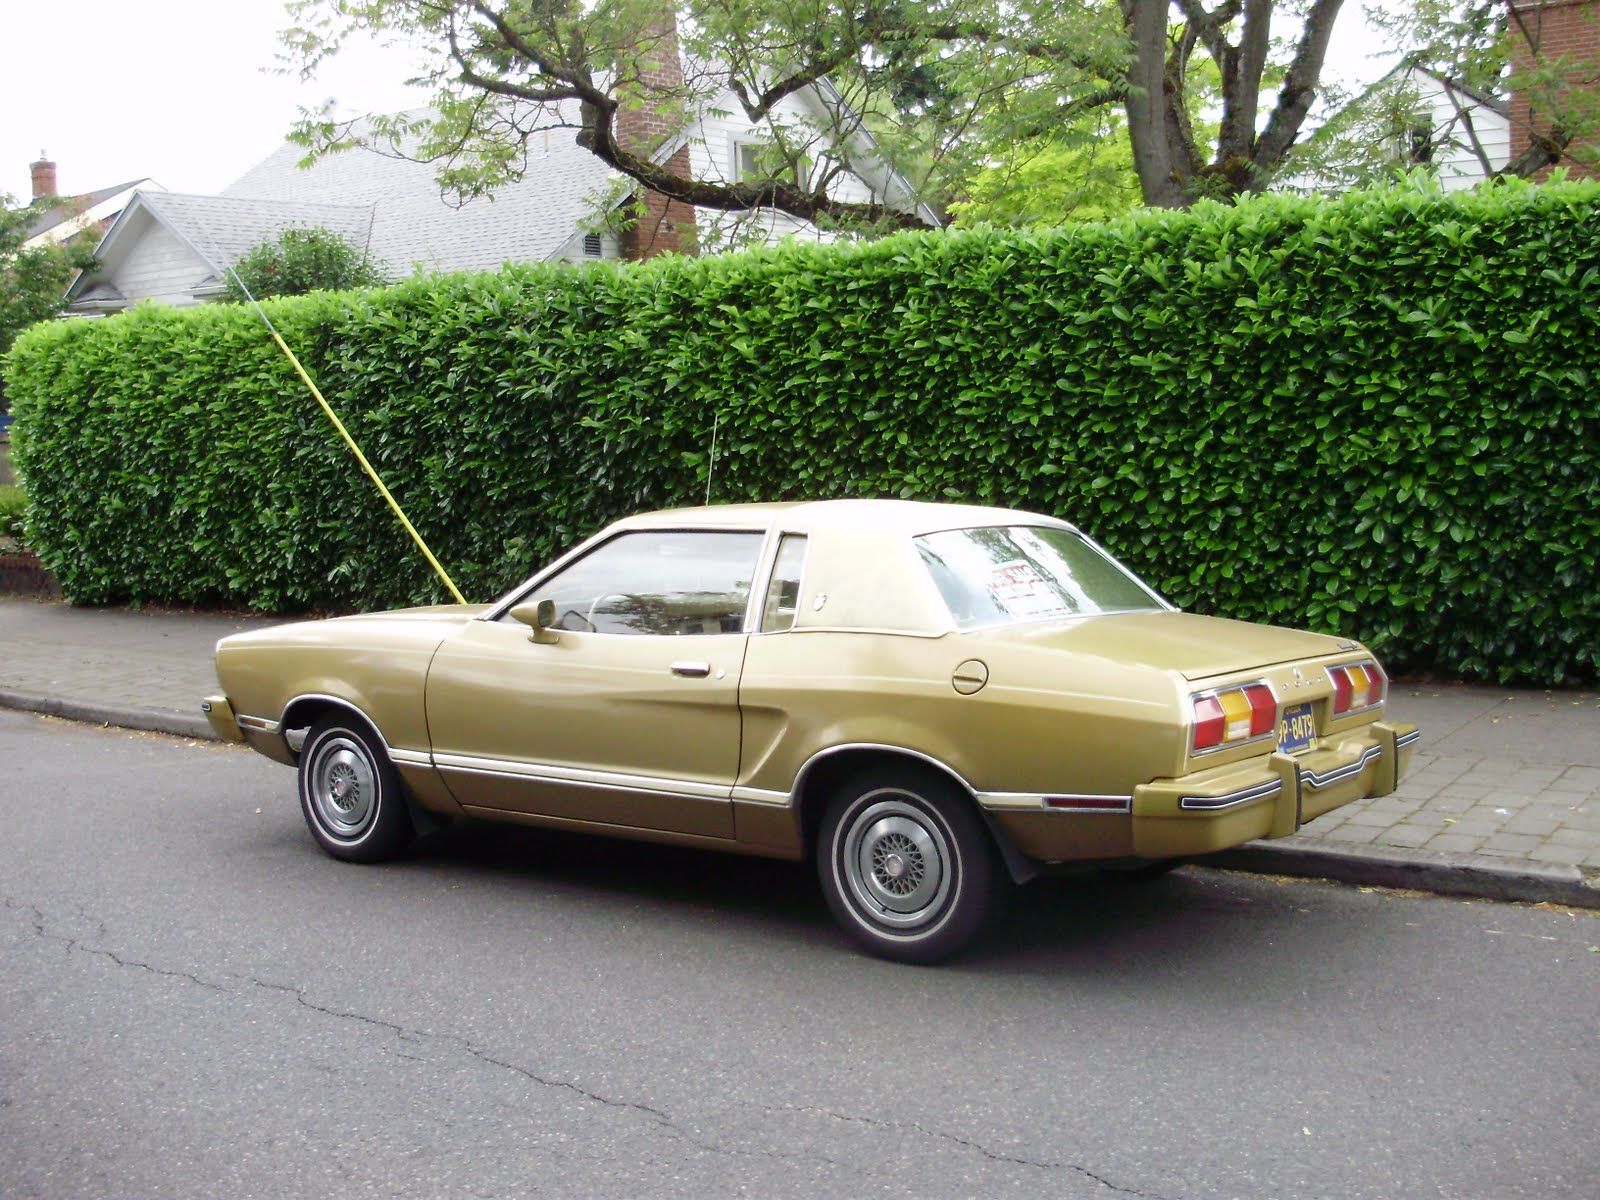 Tan 1977 Ford Mustang